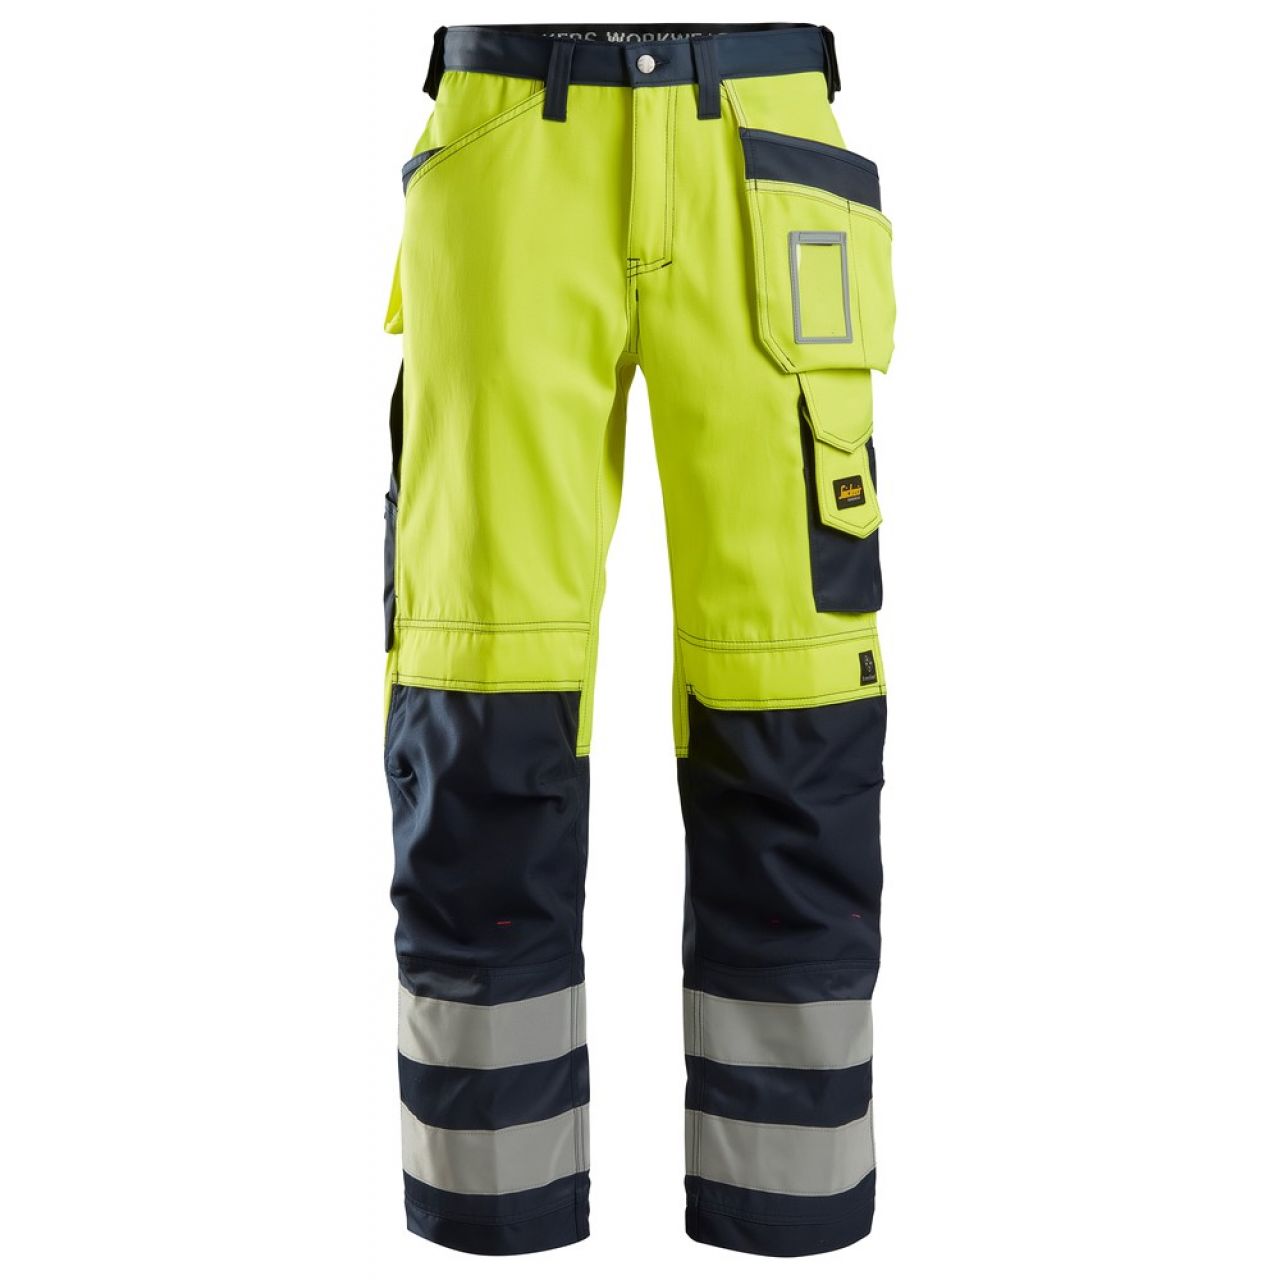 3233 Pantalones largos de trabajo de alta visibilidad clase 2 con bolsillos flotantes amarillo-azul marino talla 84